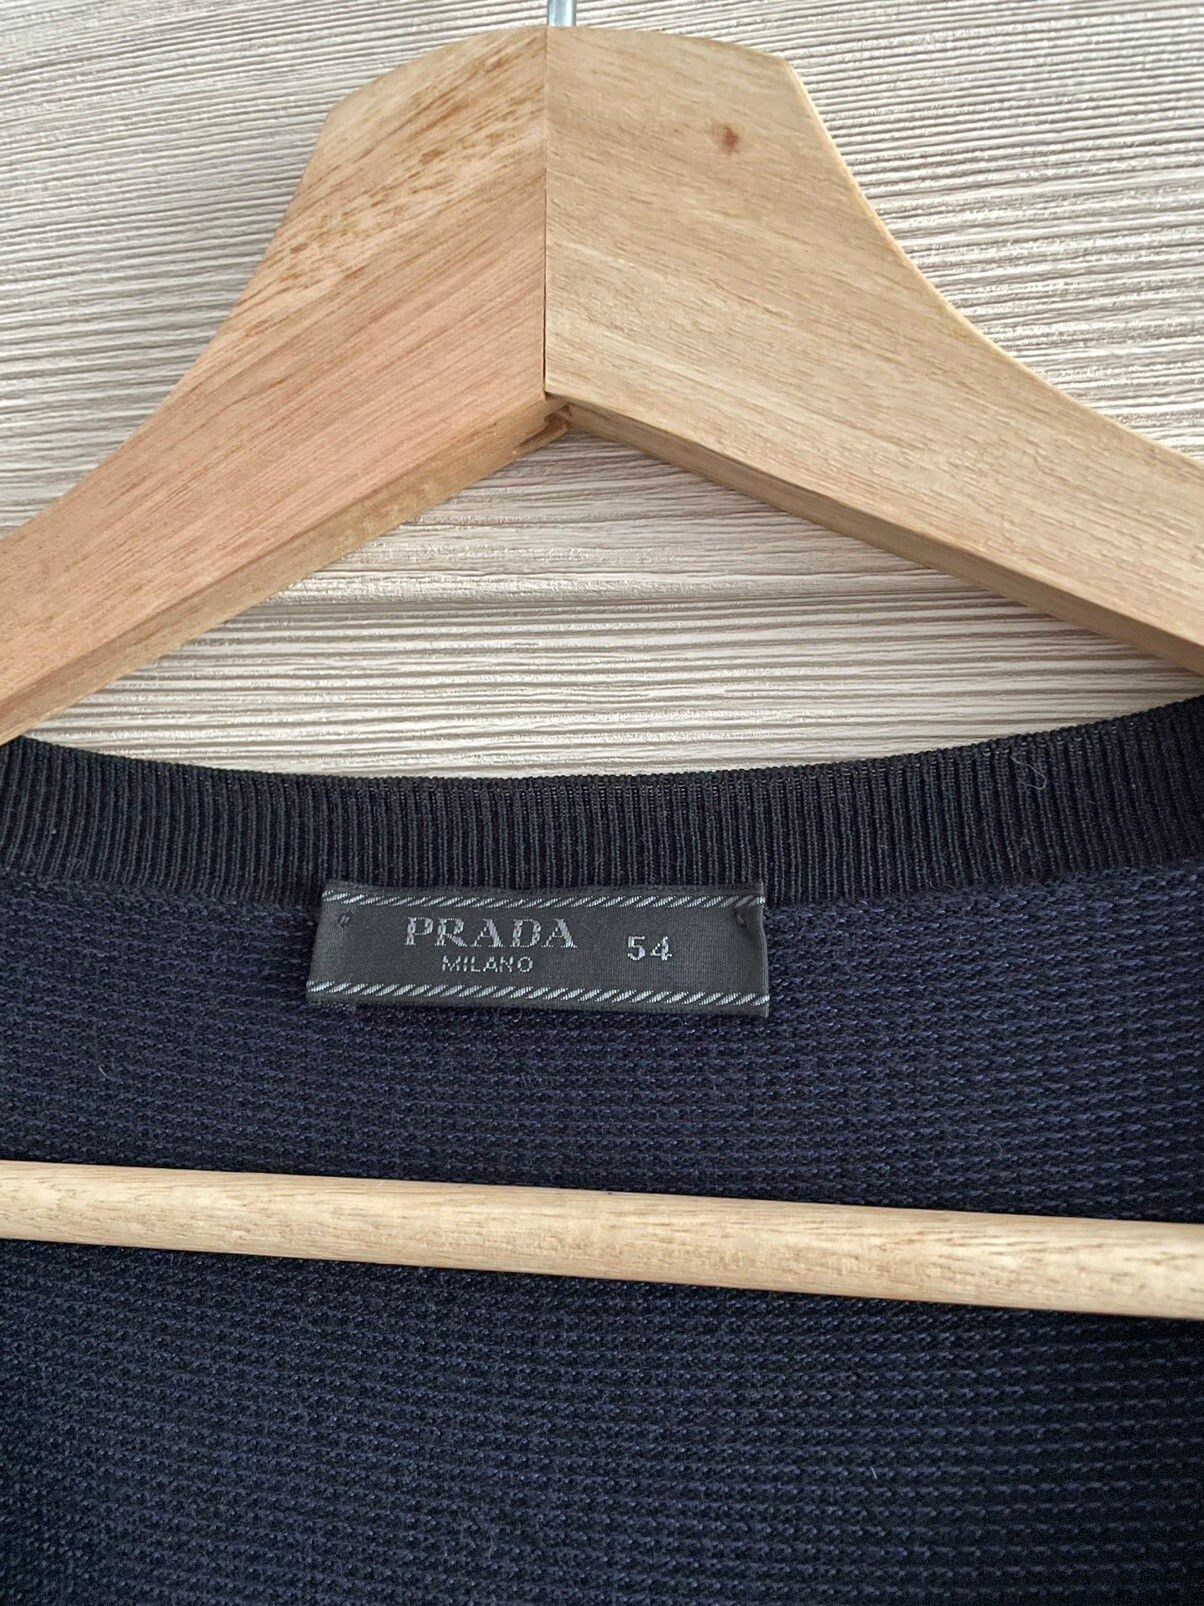 Prada Prada Milano Multi Silk V-neck Lightweight Gradient Jumper Size US L / EU 52-54 / 3 - 6 Thumbnail